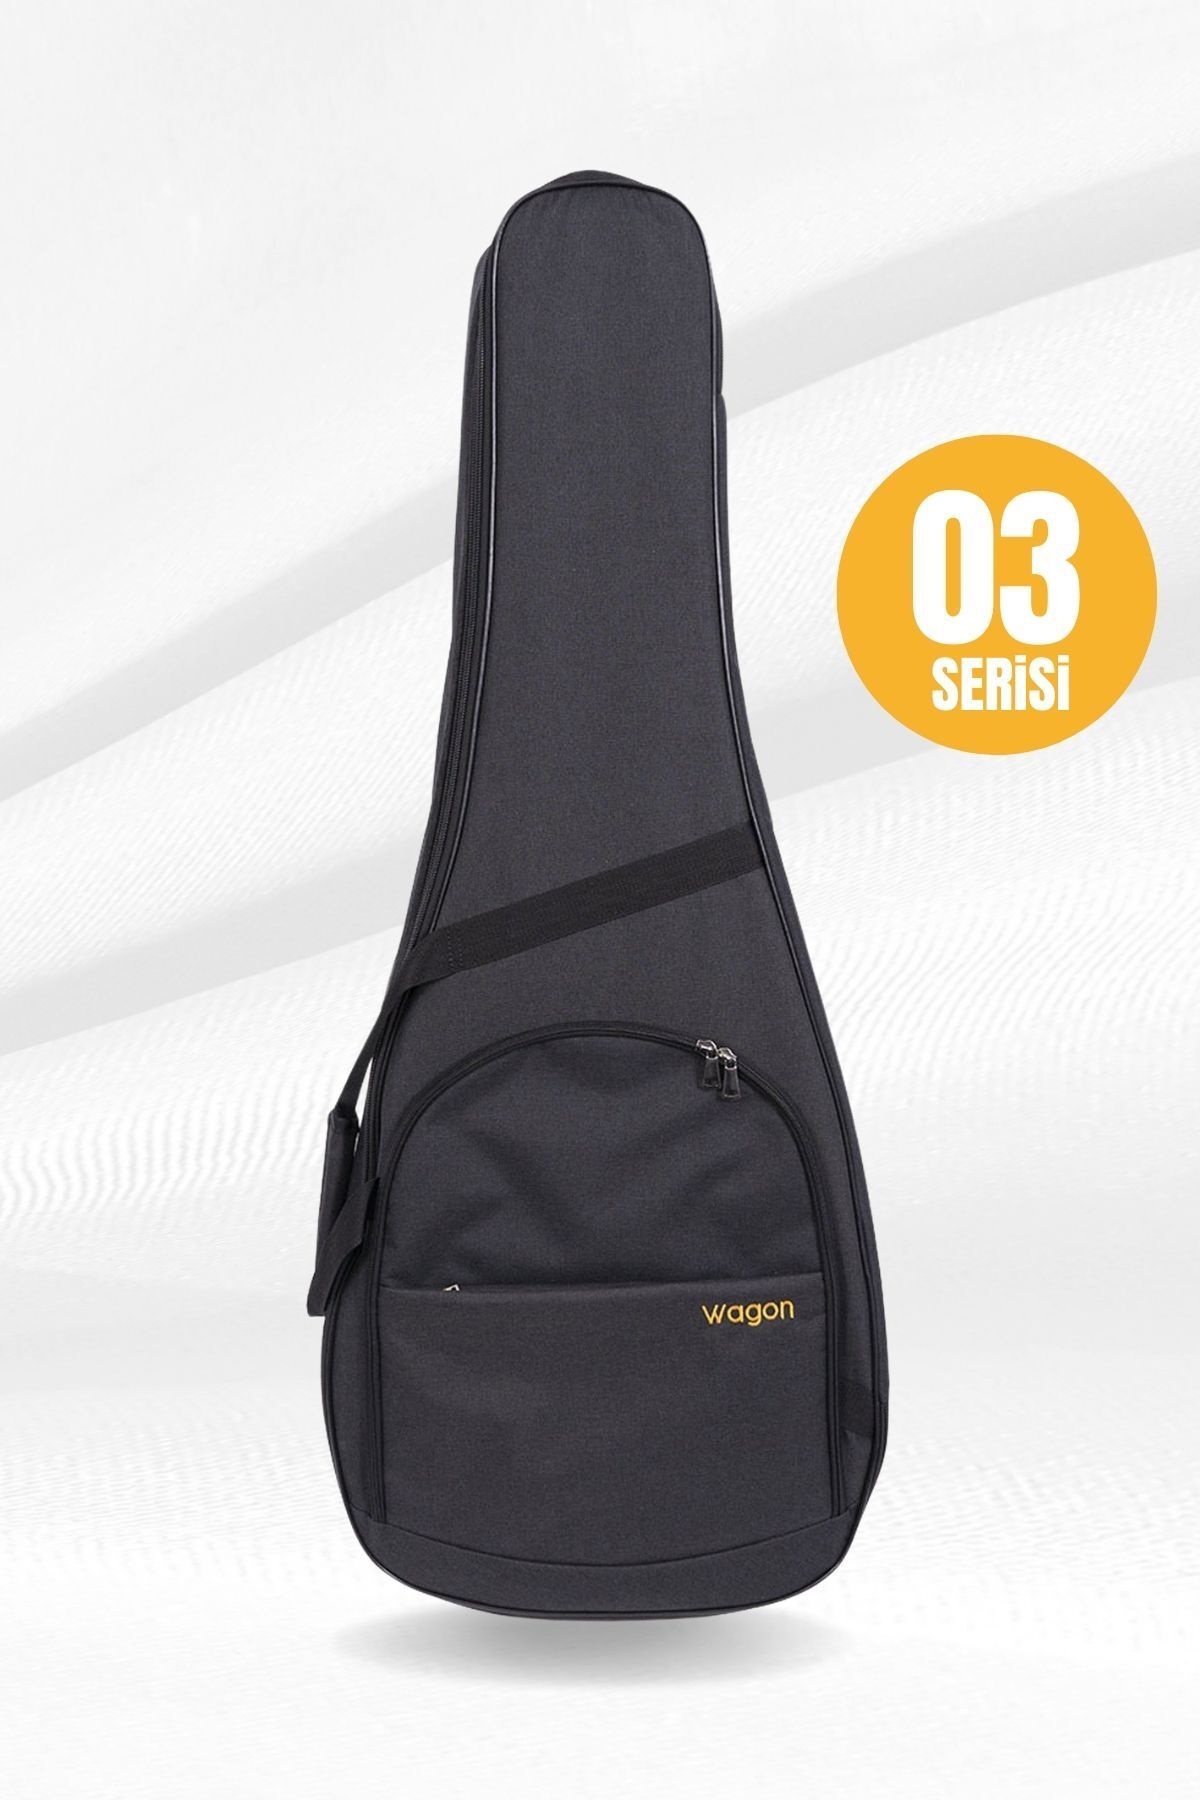 Wagon 03 Serisi Klasik Gitar Çantası - Siyah